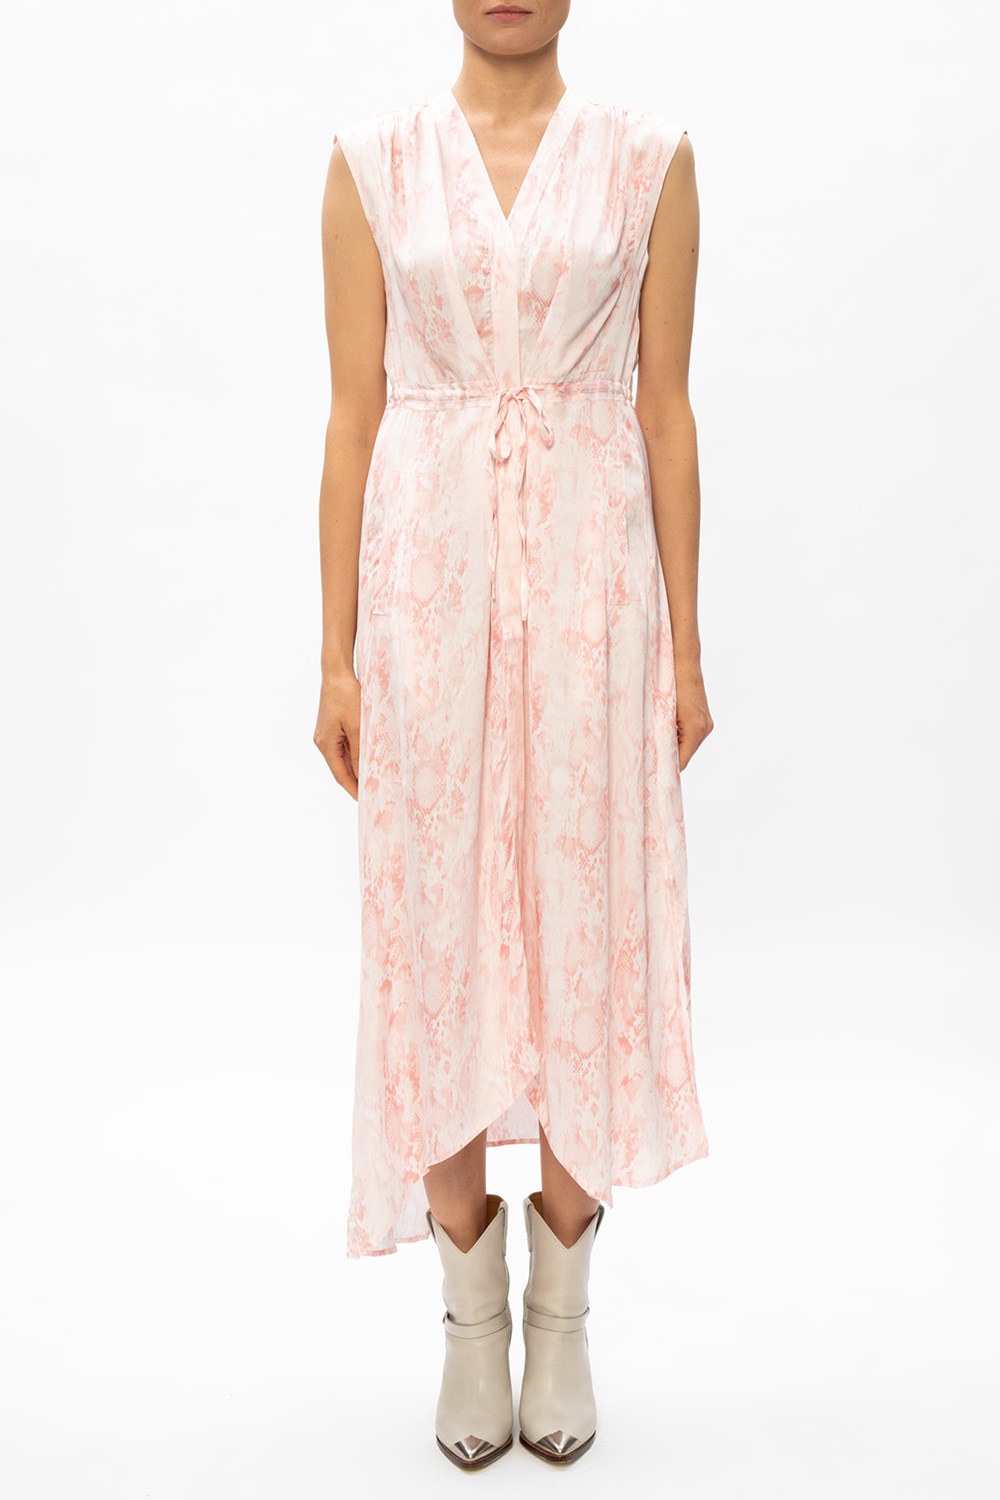 AllSaints ‘Tate’ sleeveless dress